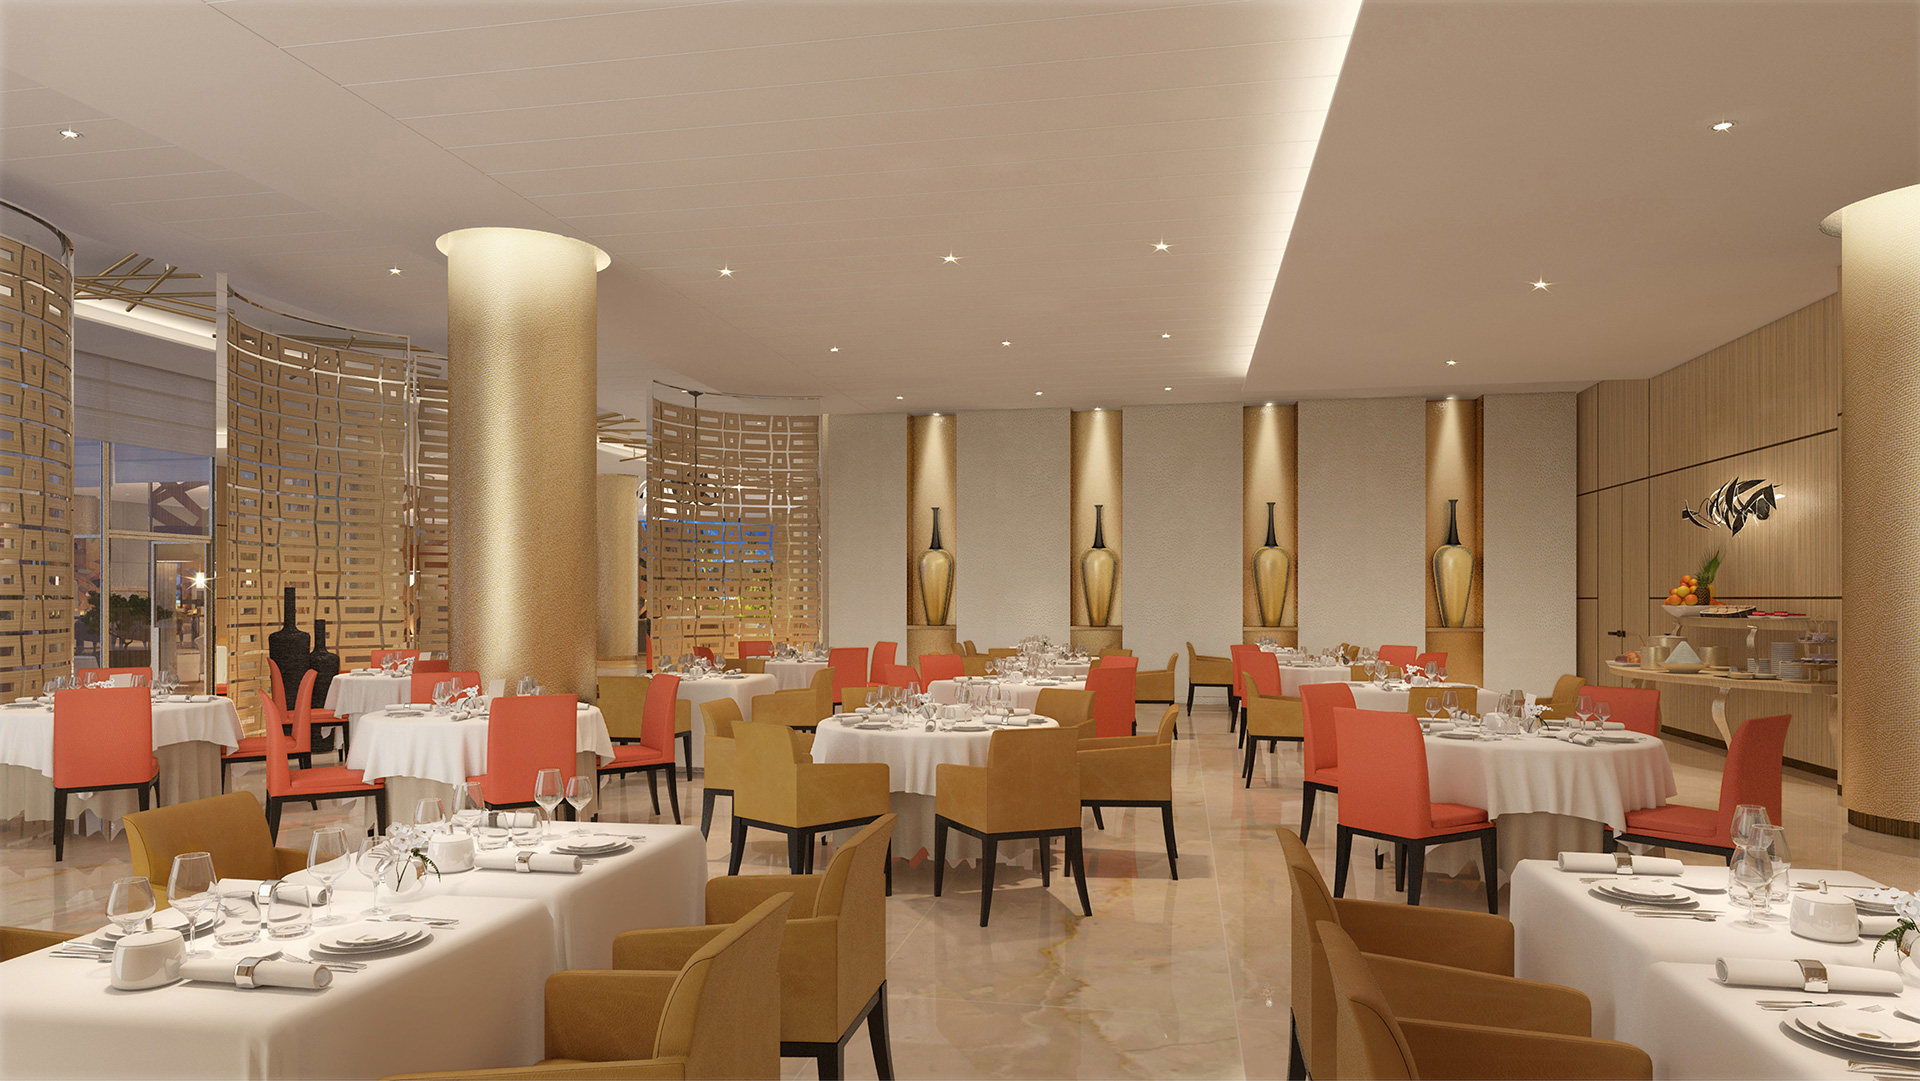 Restaurant for AZALAI Hôtel & Spa 4* by Borella Art Design